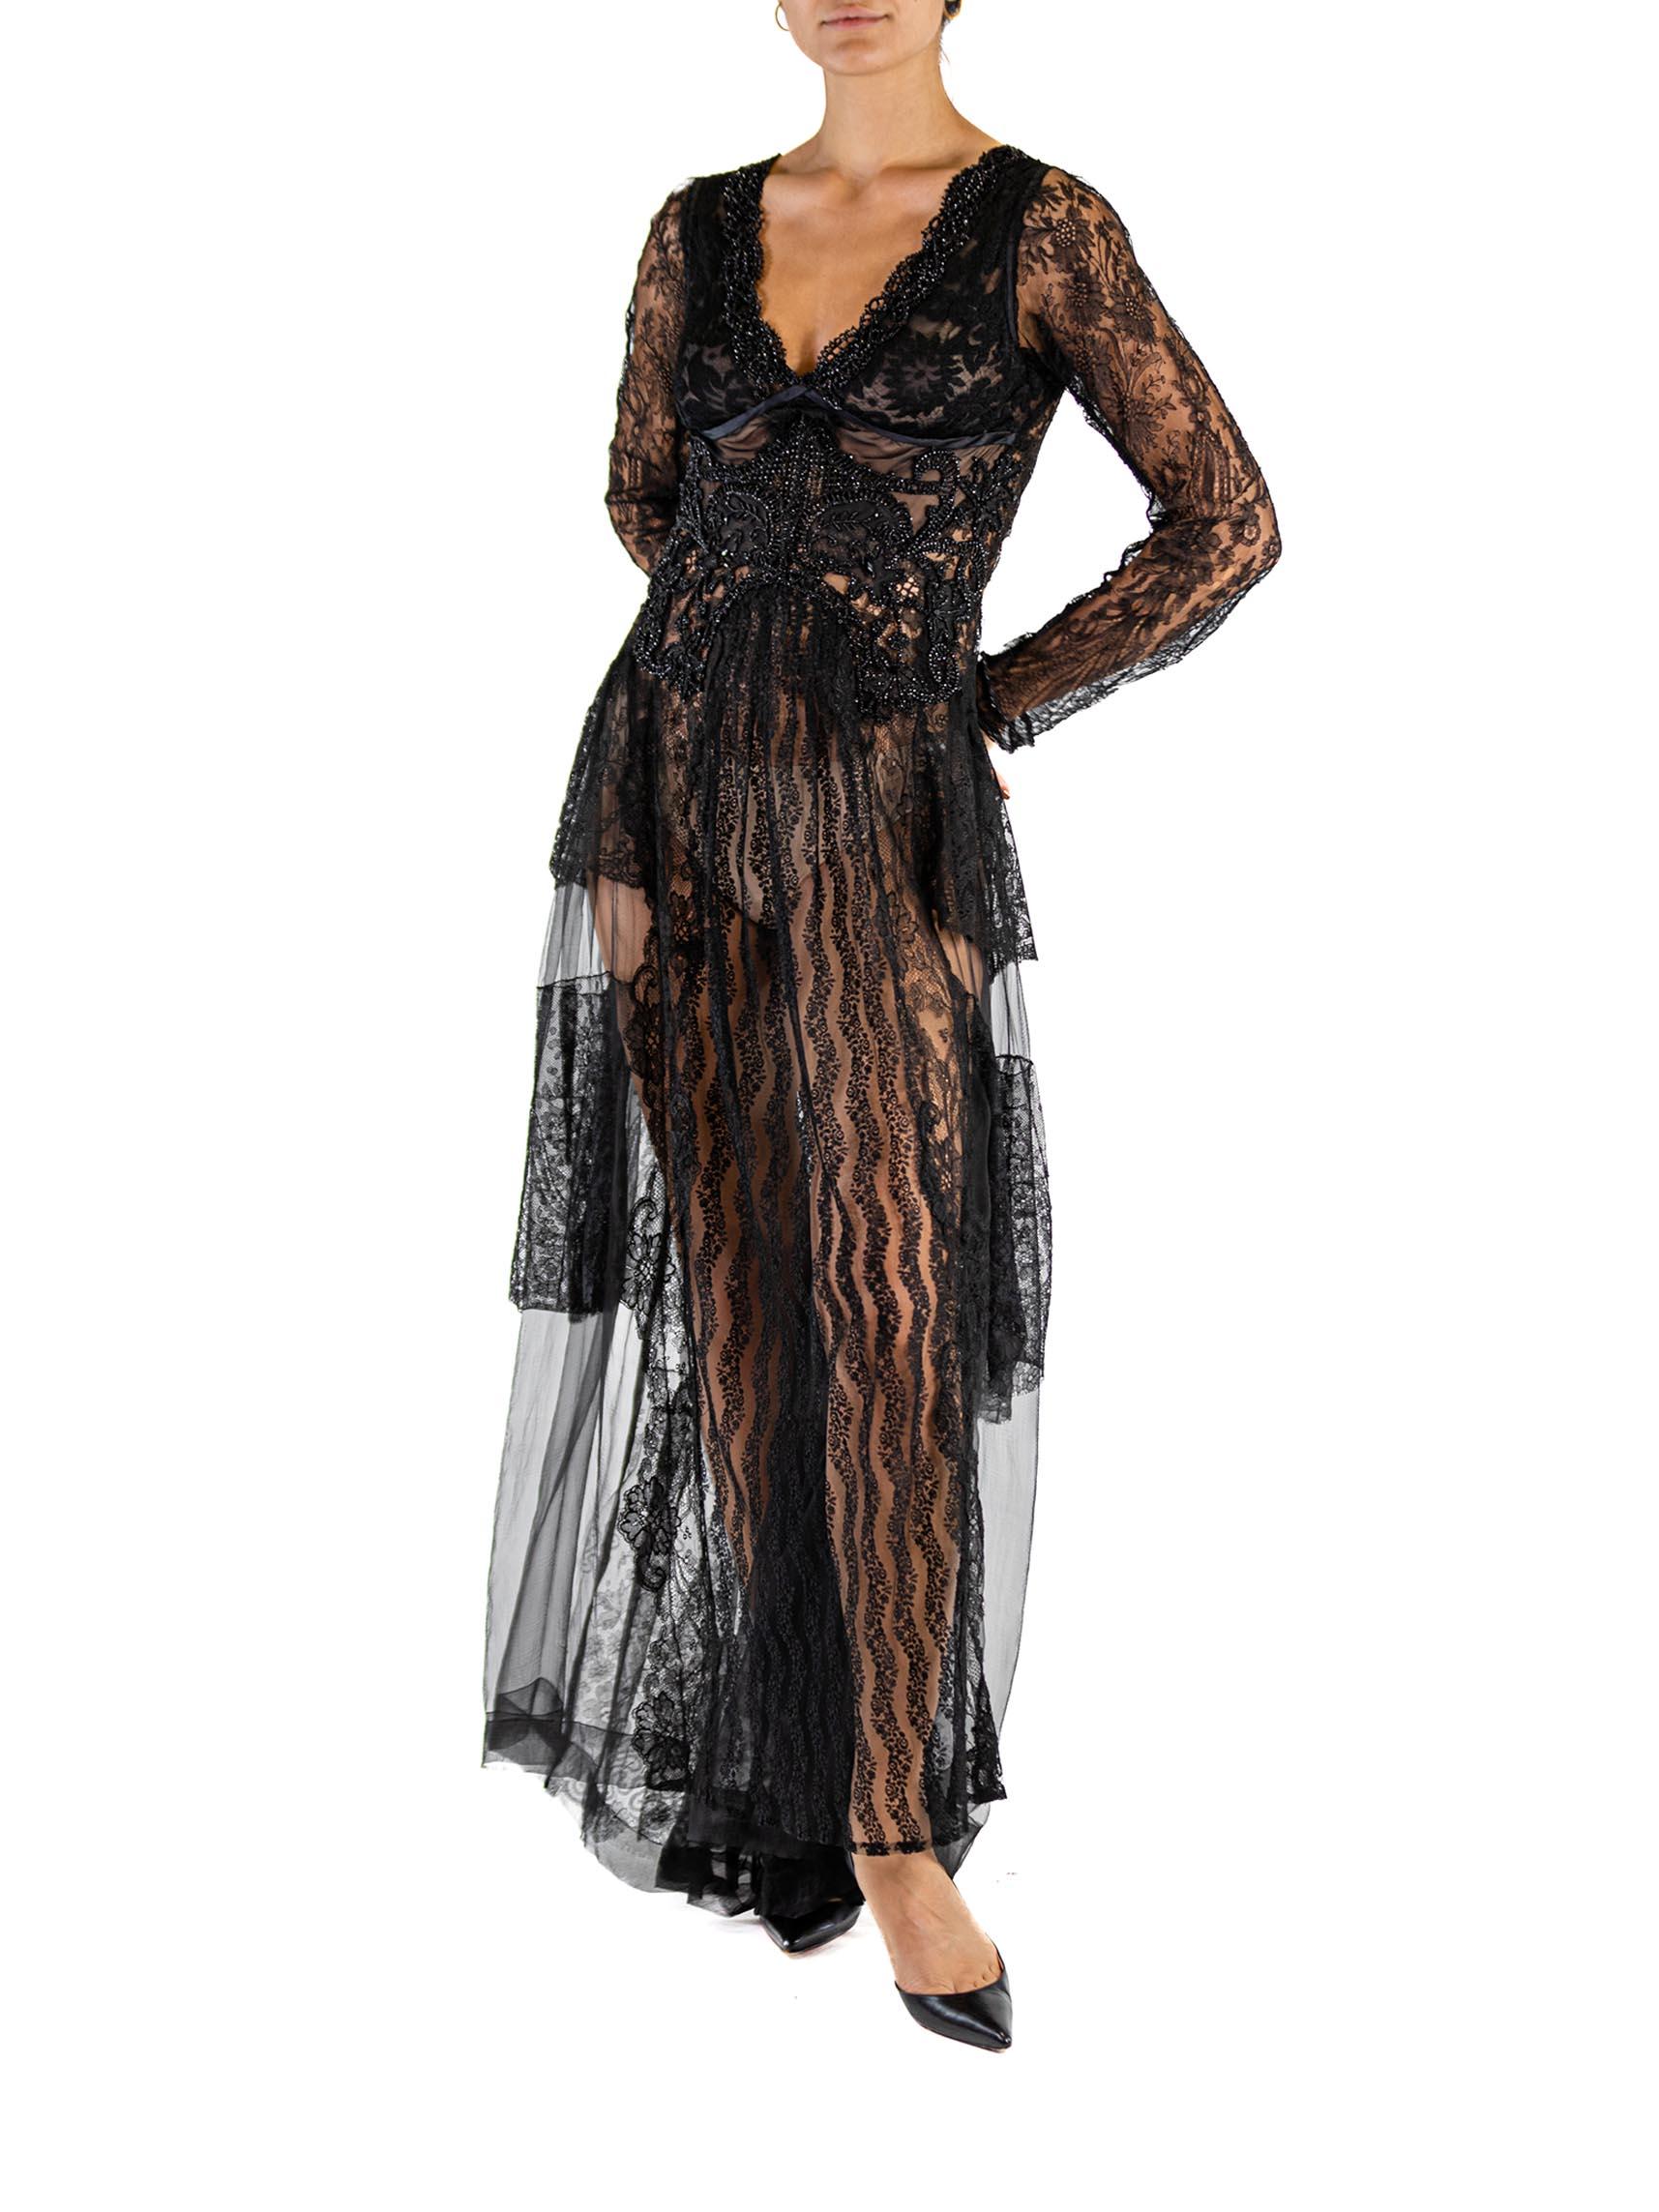 MORPHEW ATELIER Black Antique Lace Victorian Beadwork Gown For Sale 6